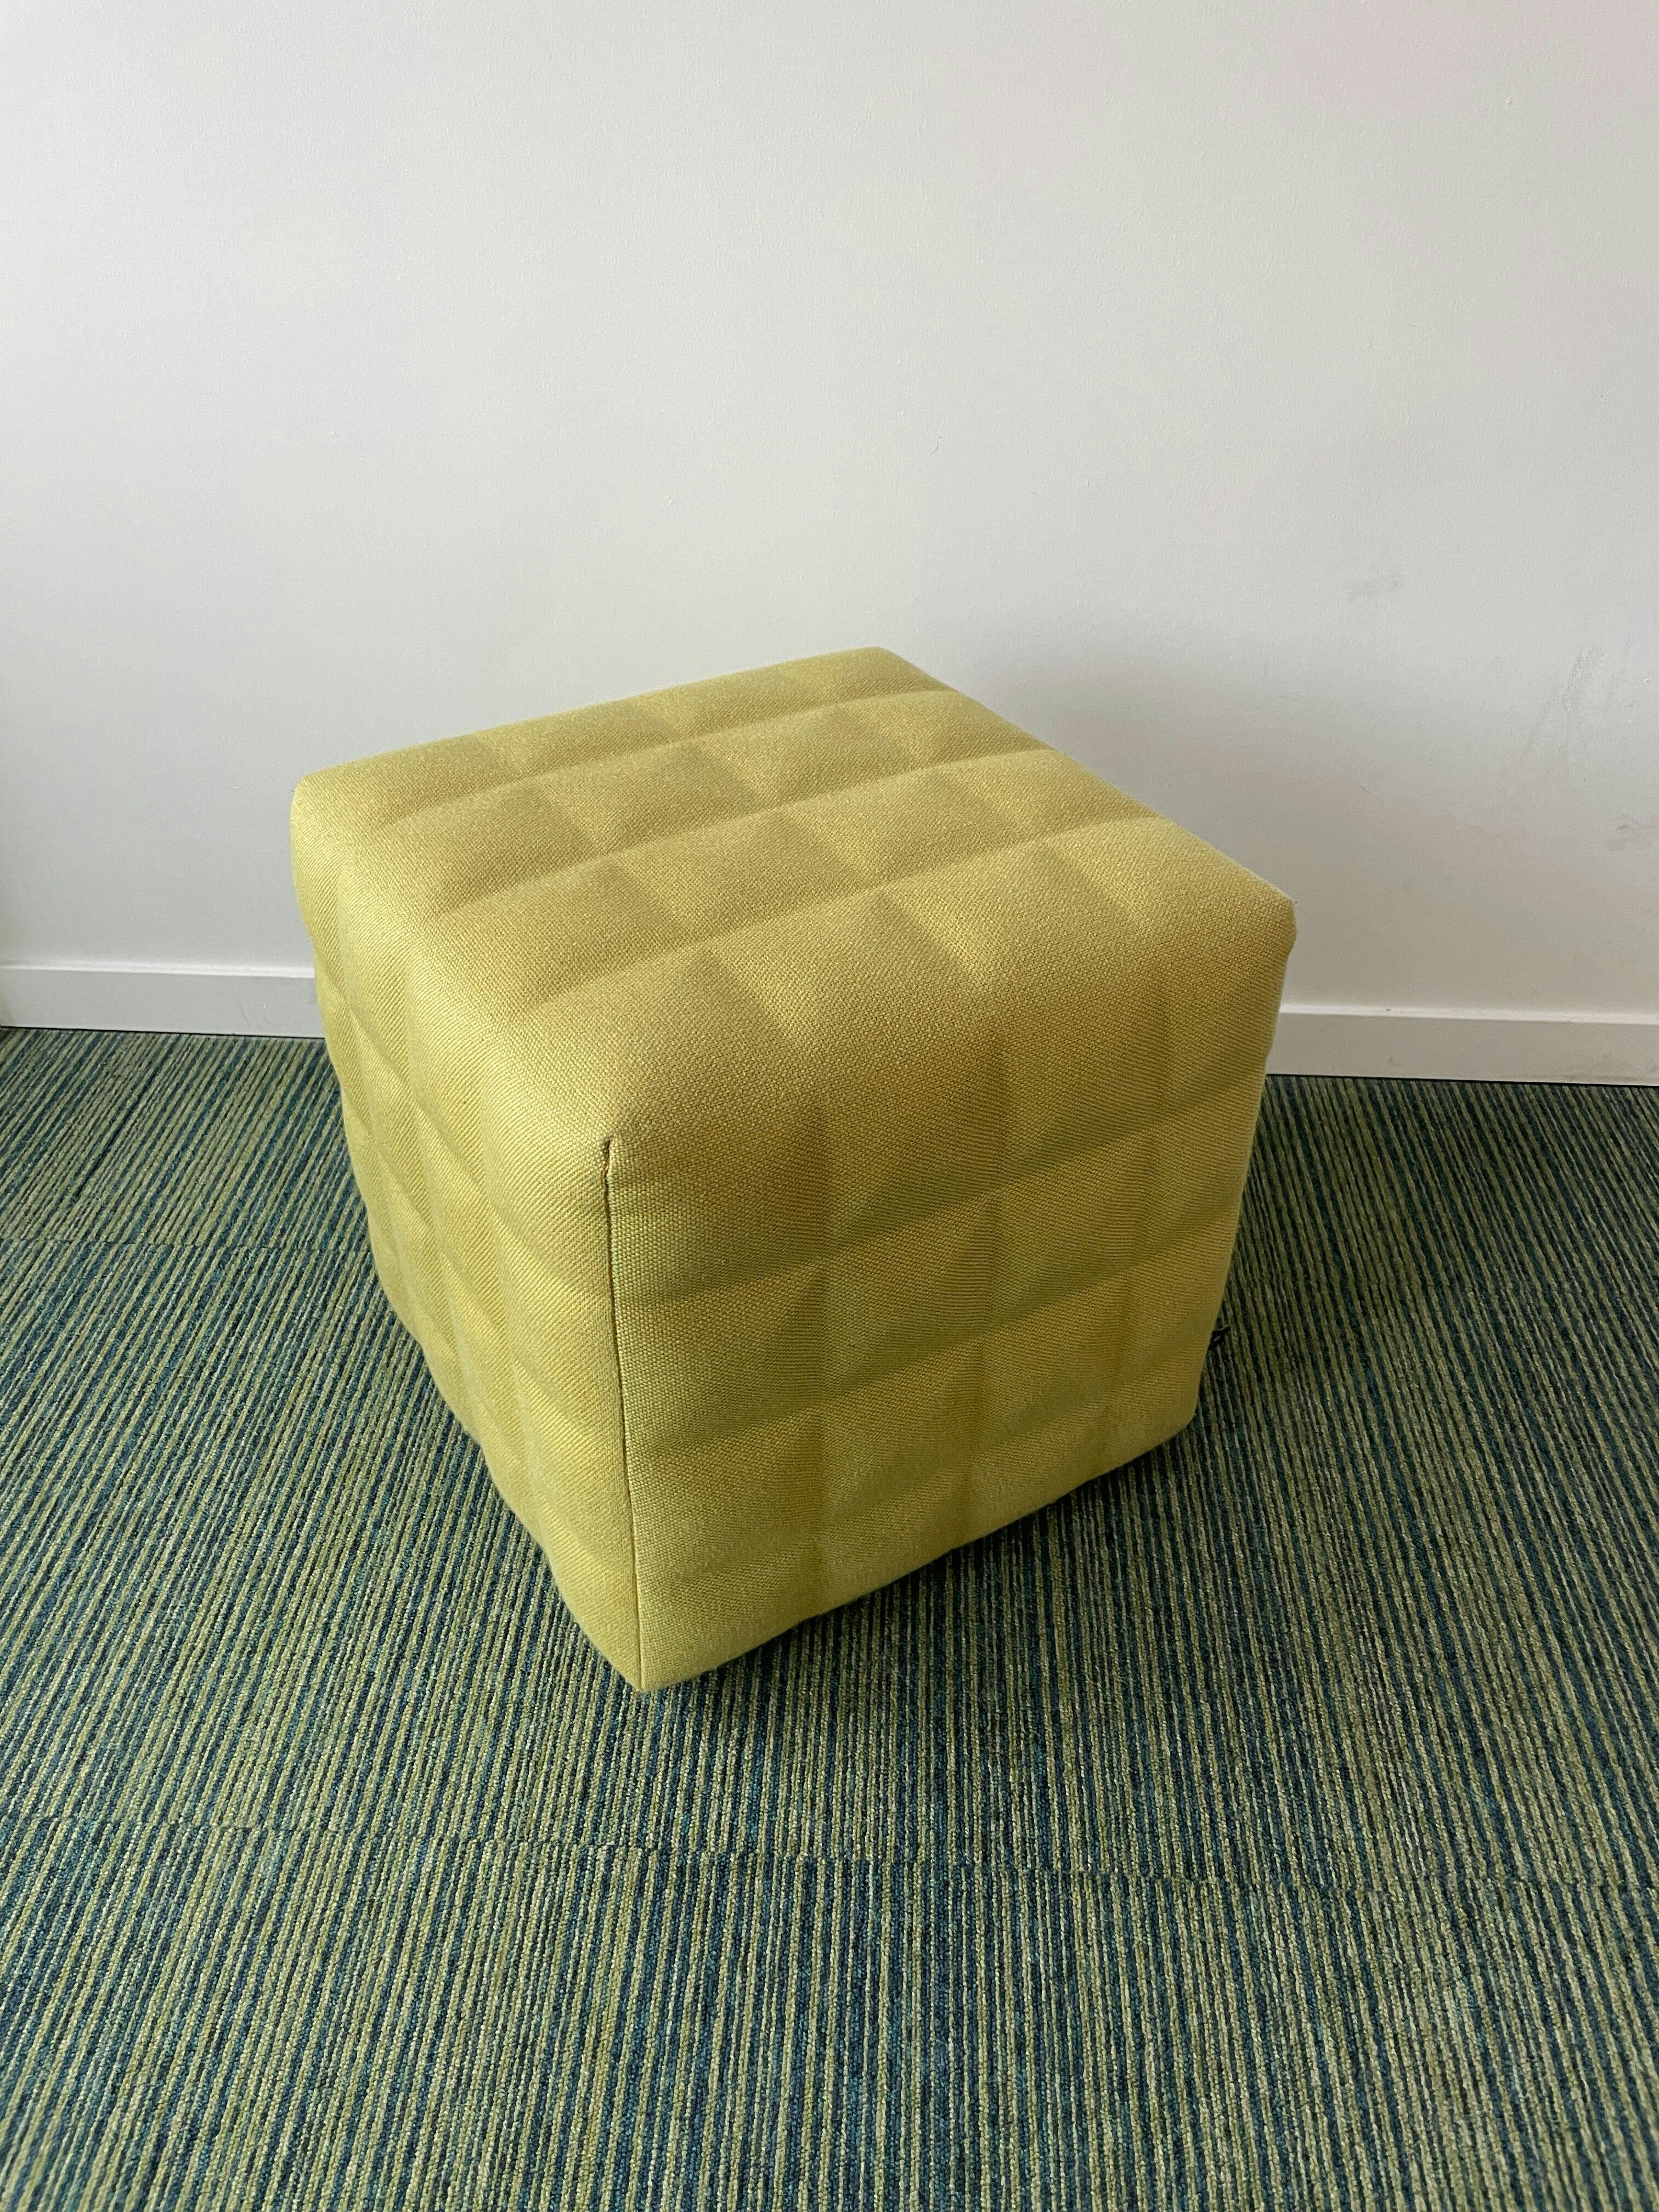 Cube assis vert clair Buzzi space - Relieve Furniture